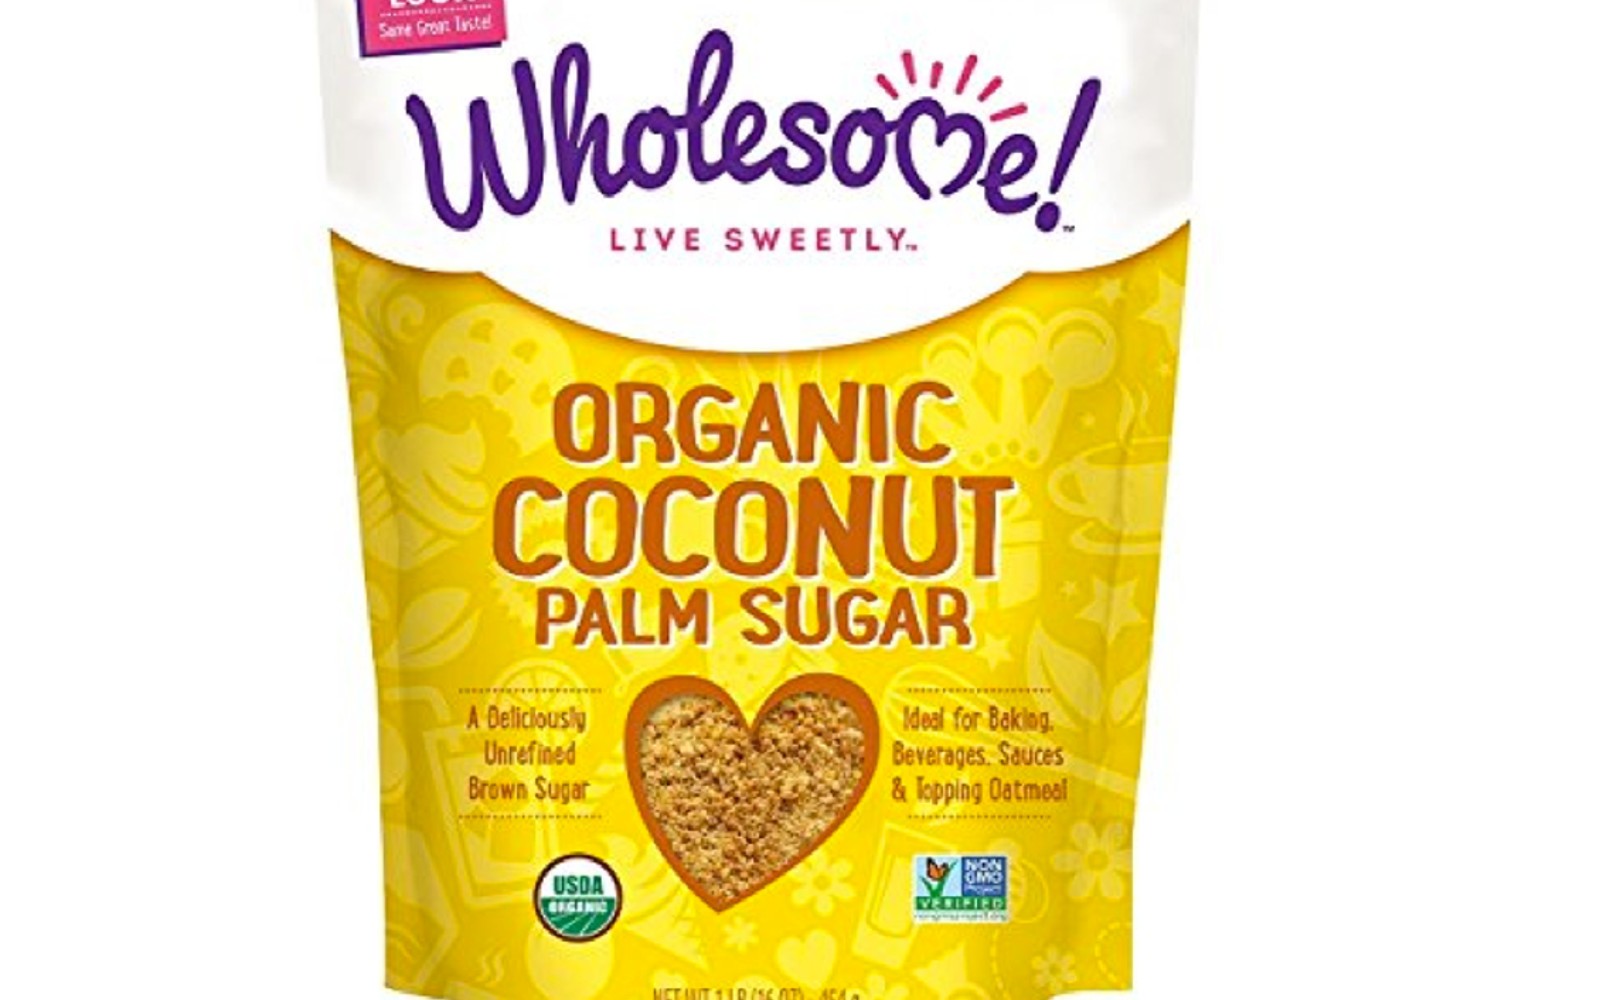 Wholesome Organic Coconut Palm Sugar